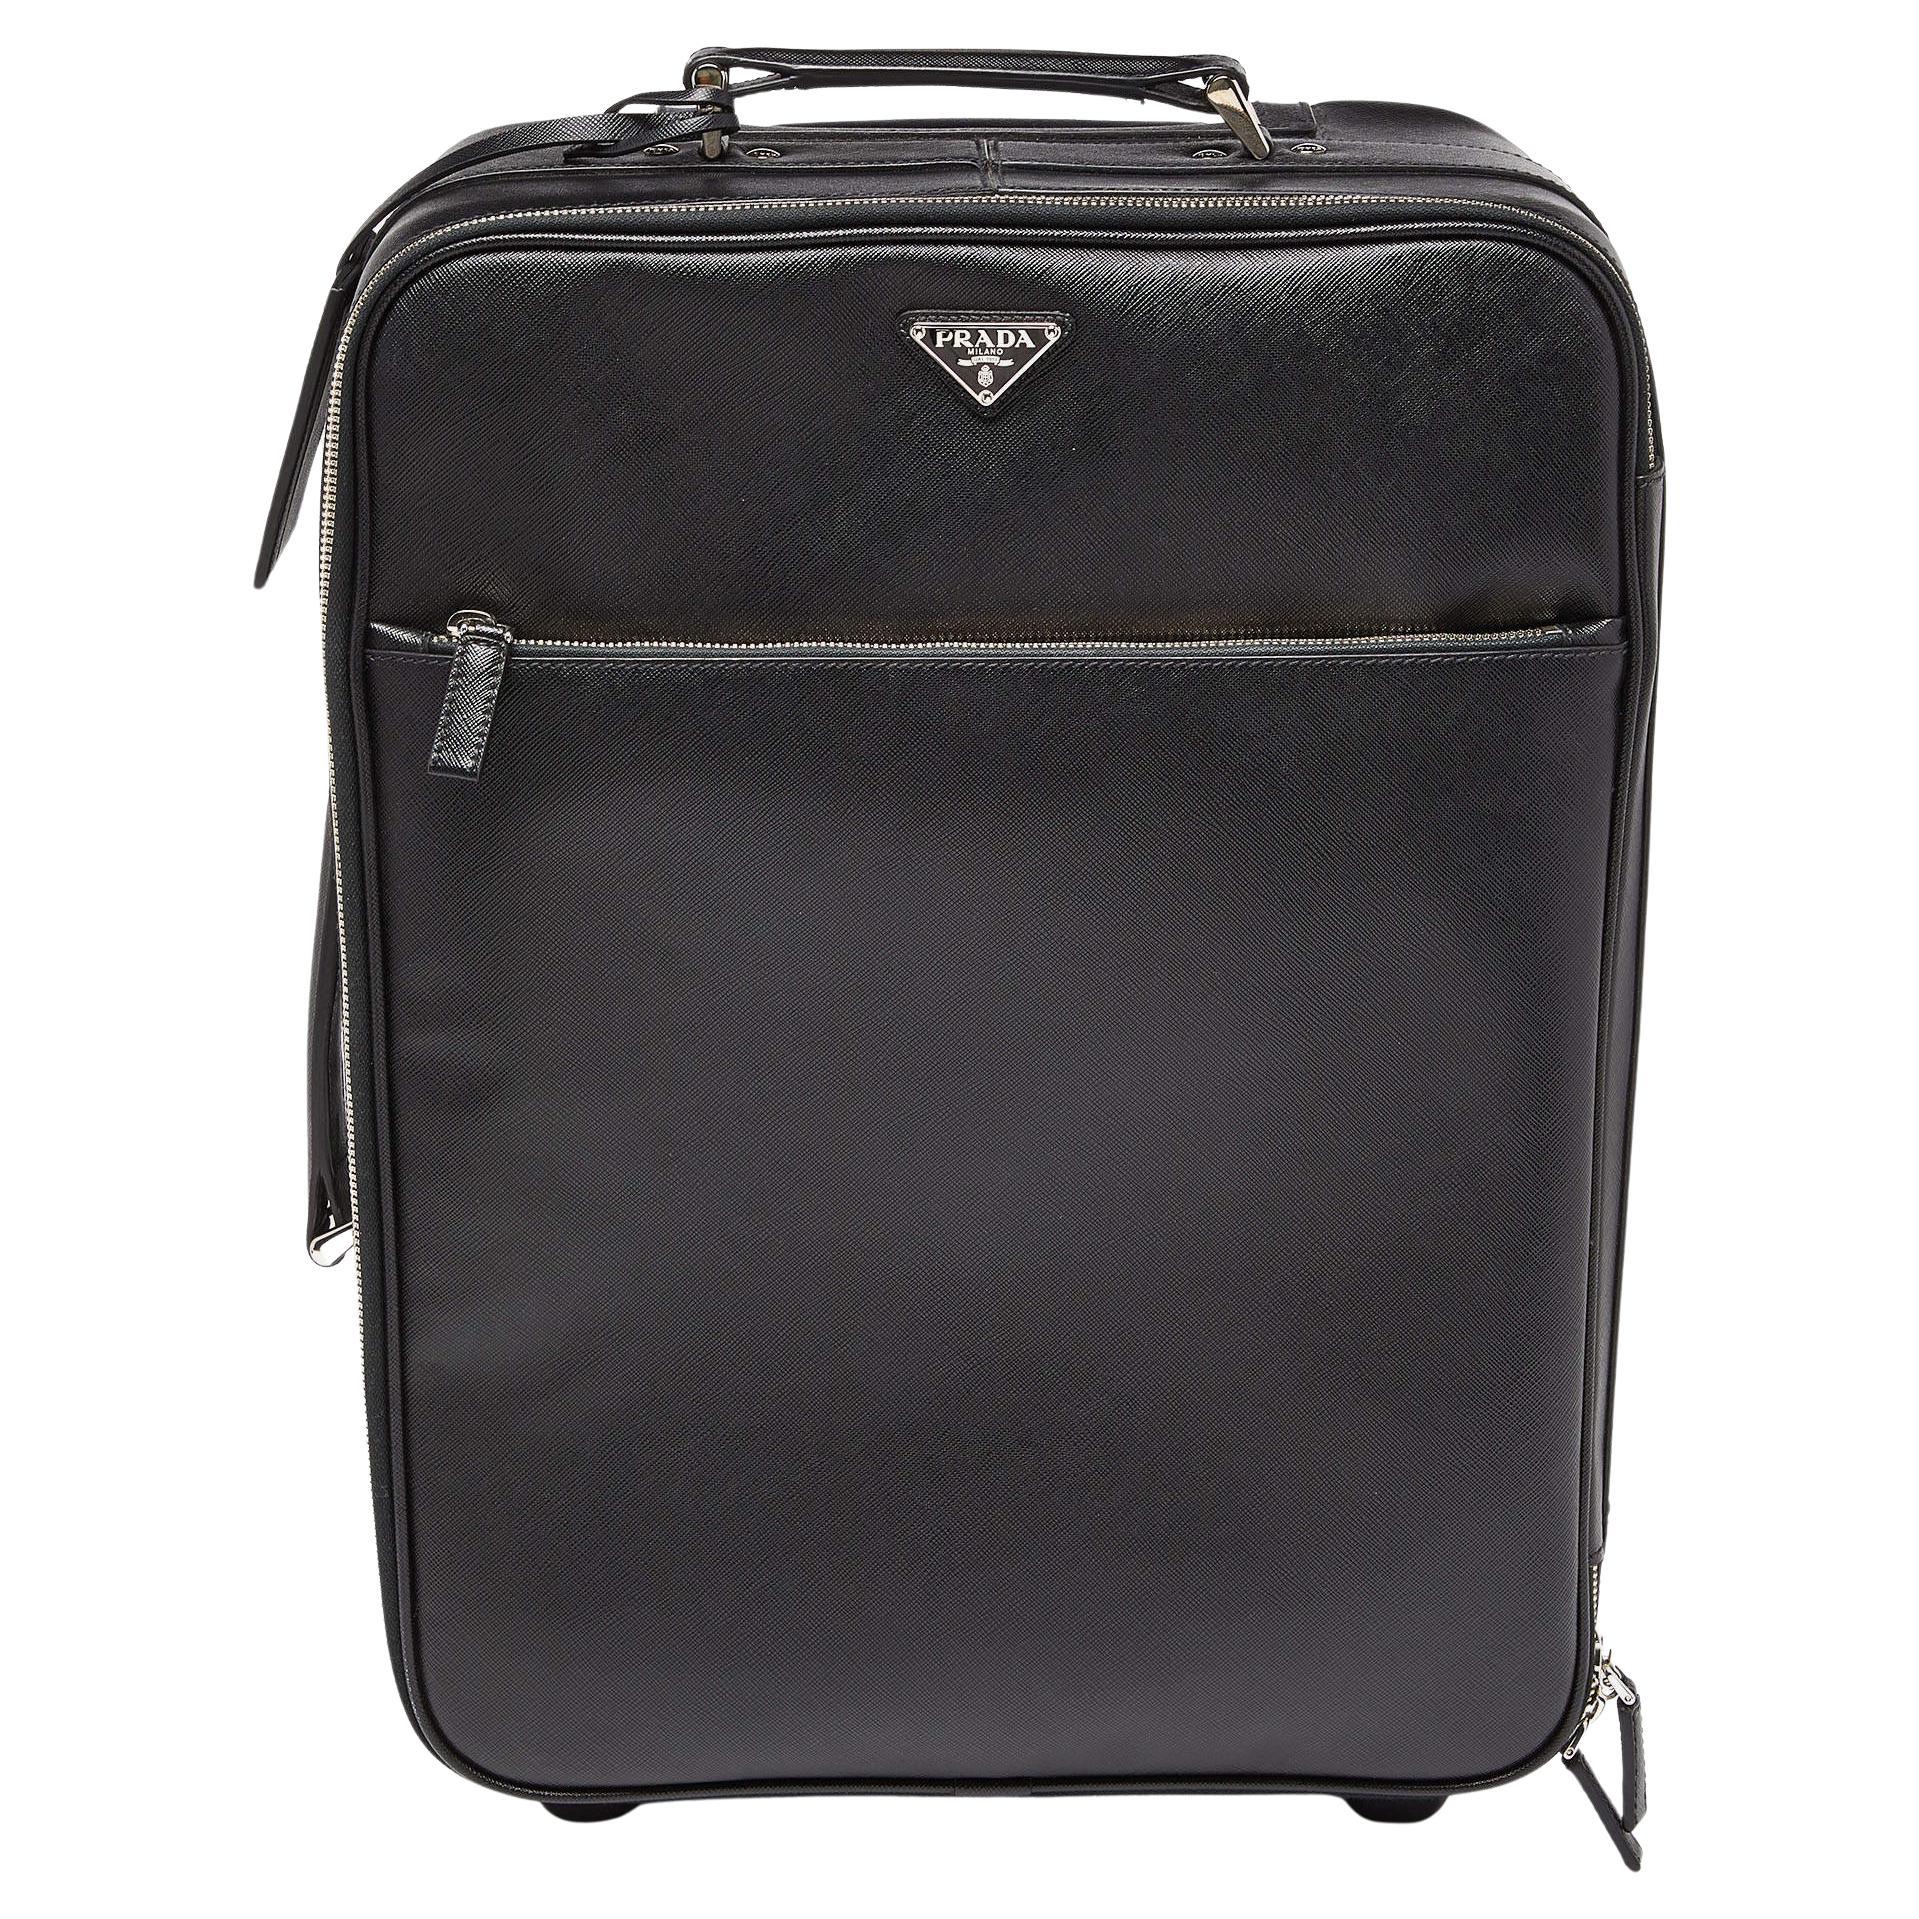 Prada Black Saffiano Leather Travel Rolling Trolley Luggage For Sale